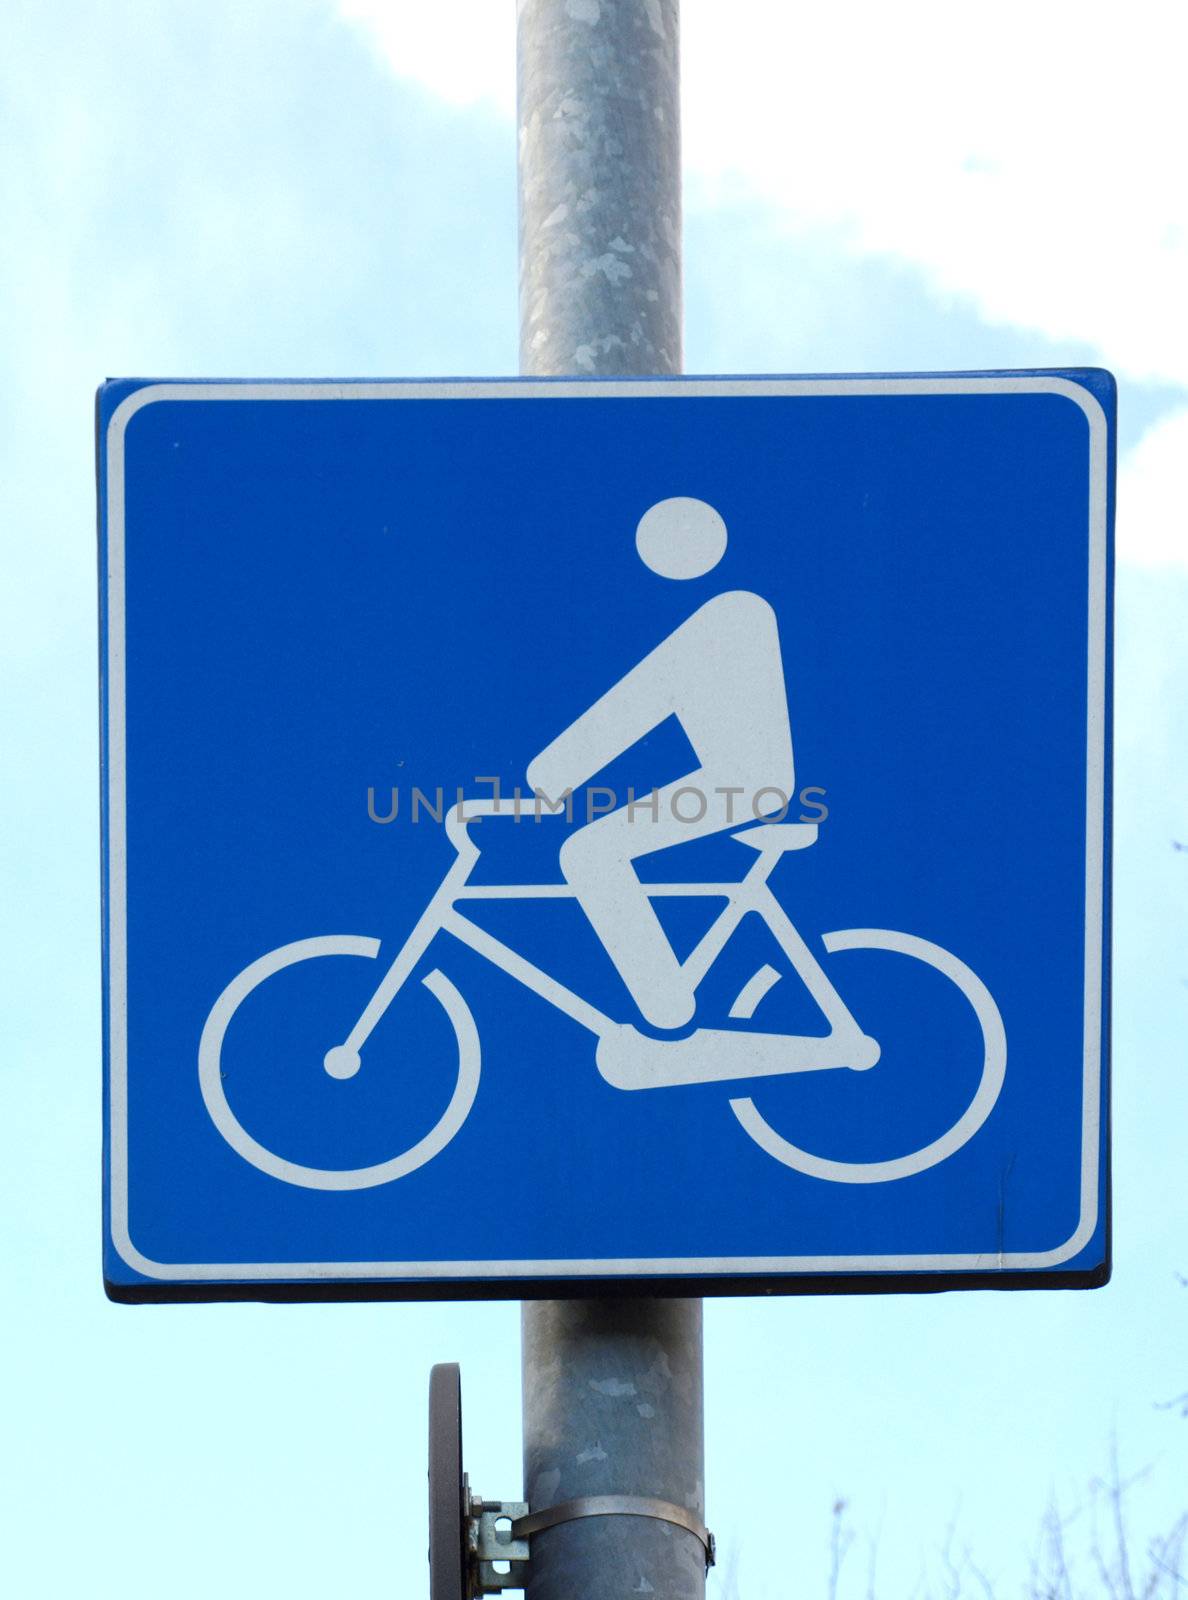 Bike lane traffic sign over blue sky